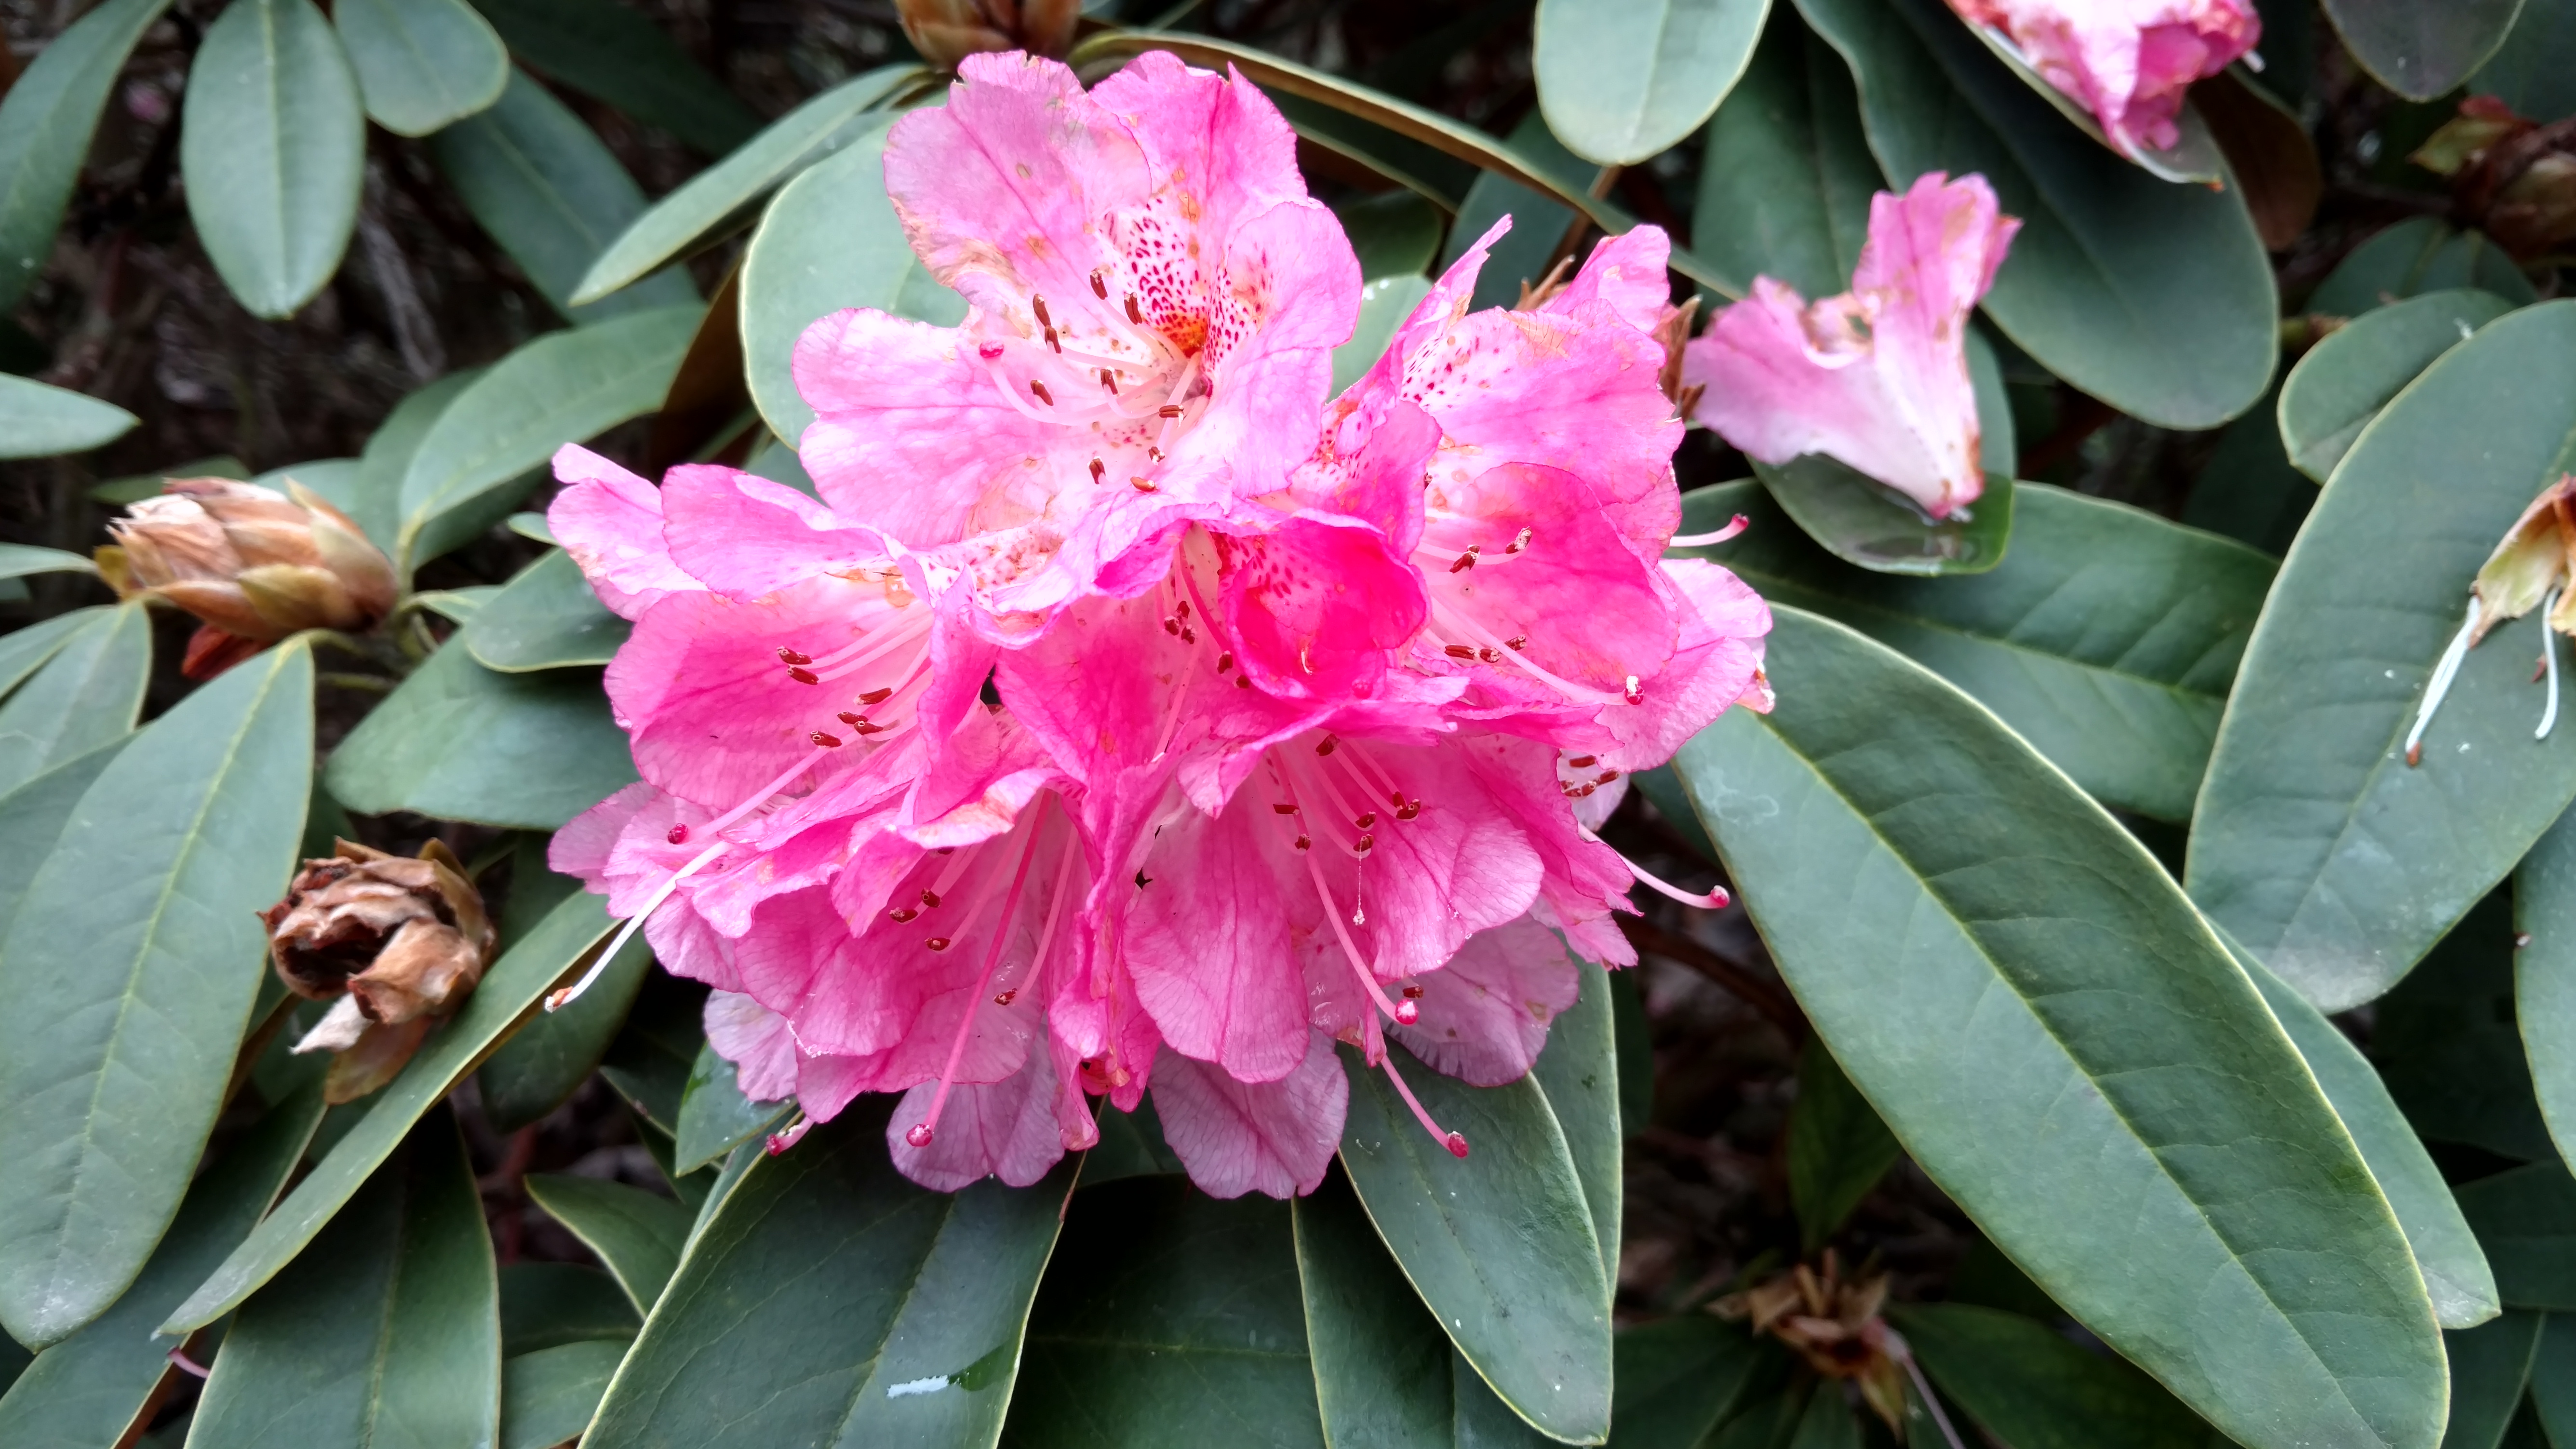 Rhododendron spp plantplacesimage20170304_163419.jpg